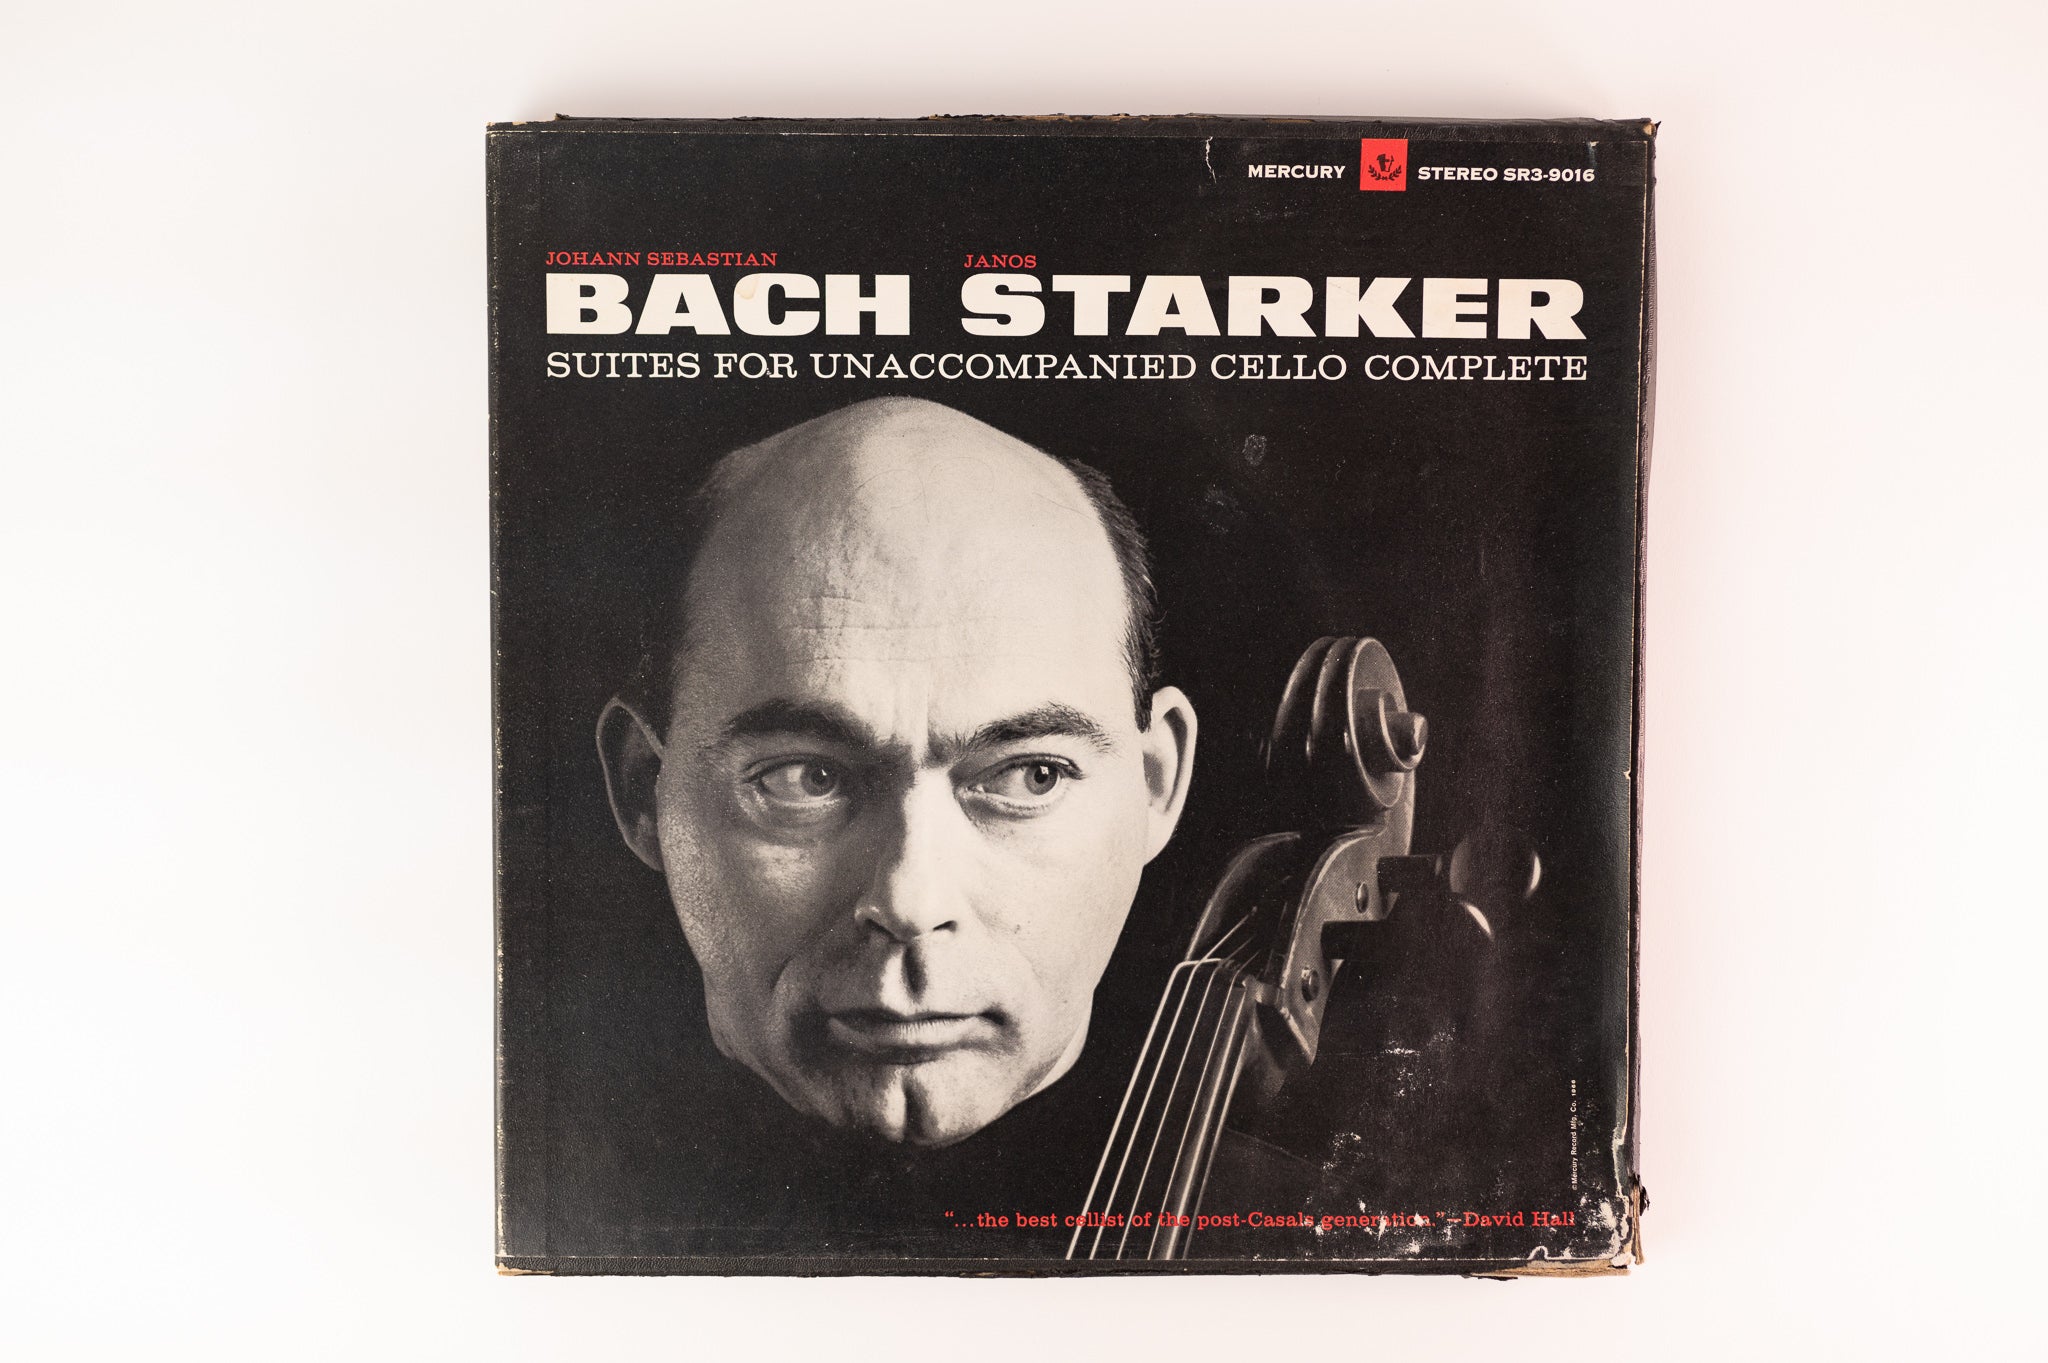 Johann Sebastian Bach - Janos Starker - Suites For Unaccompanied Cello Complete on Mercury Stereo Gold Label Promo